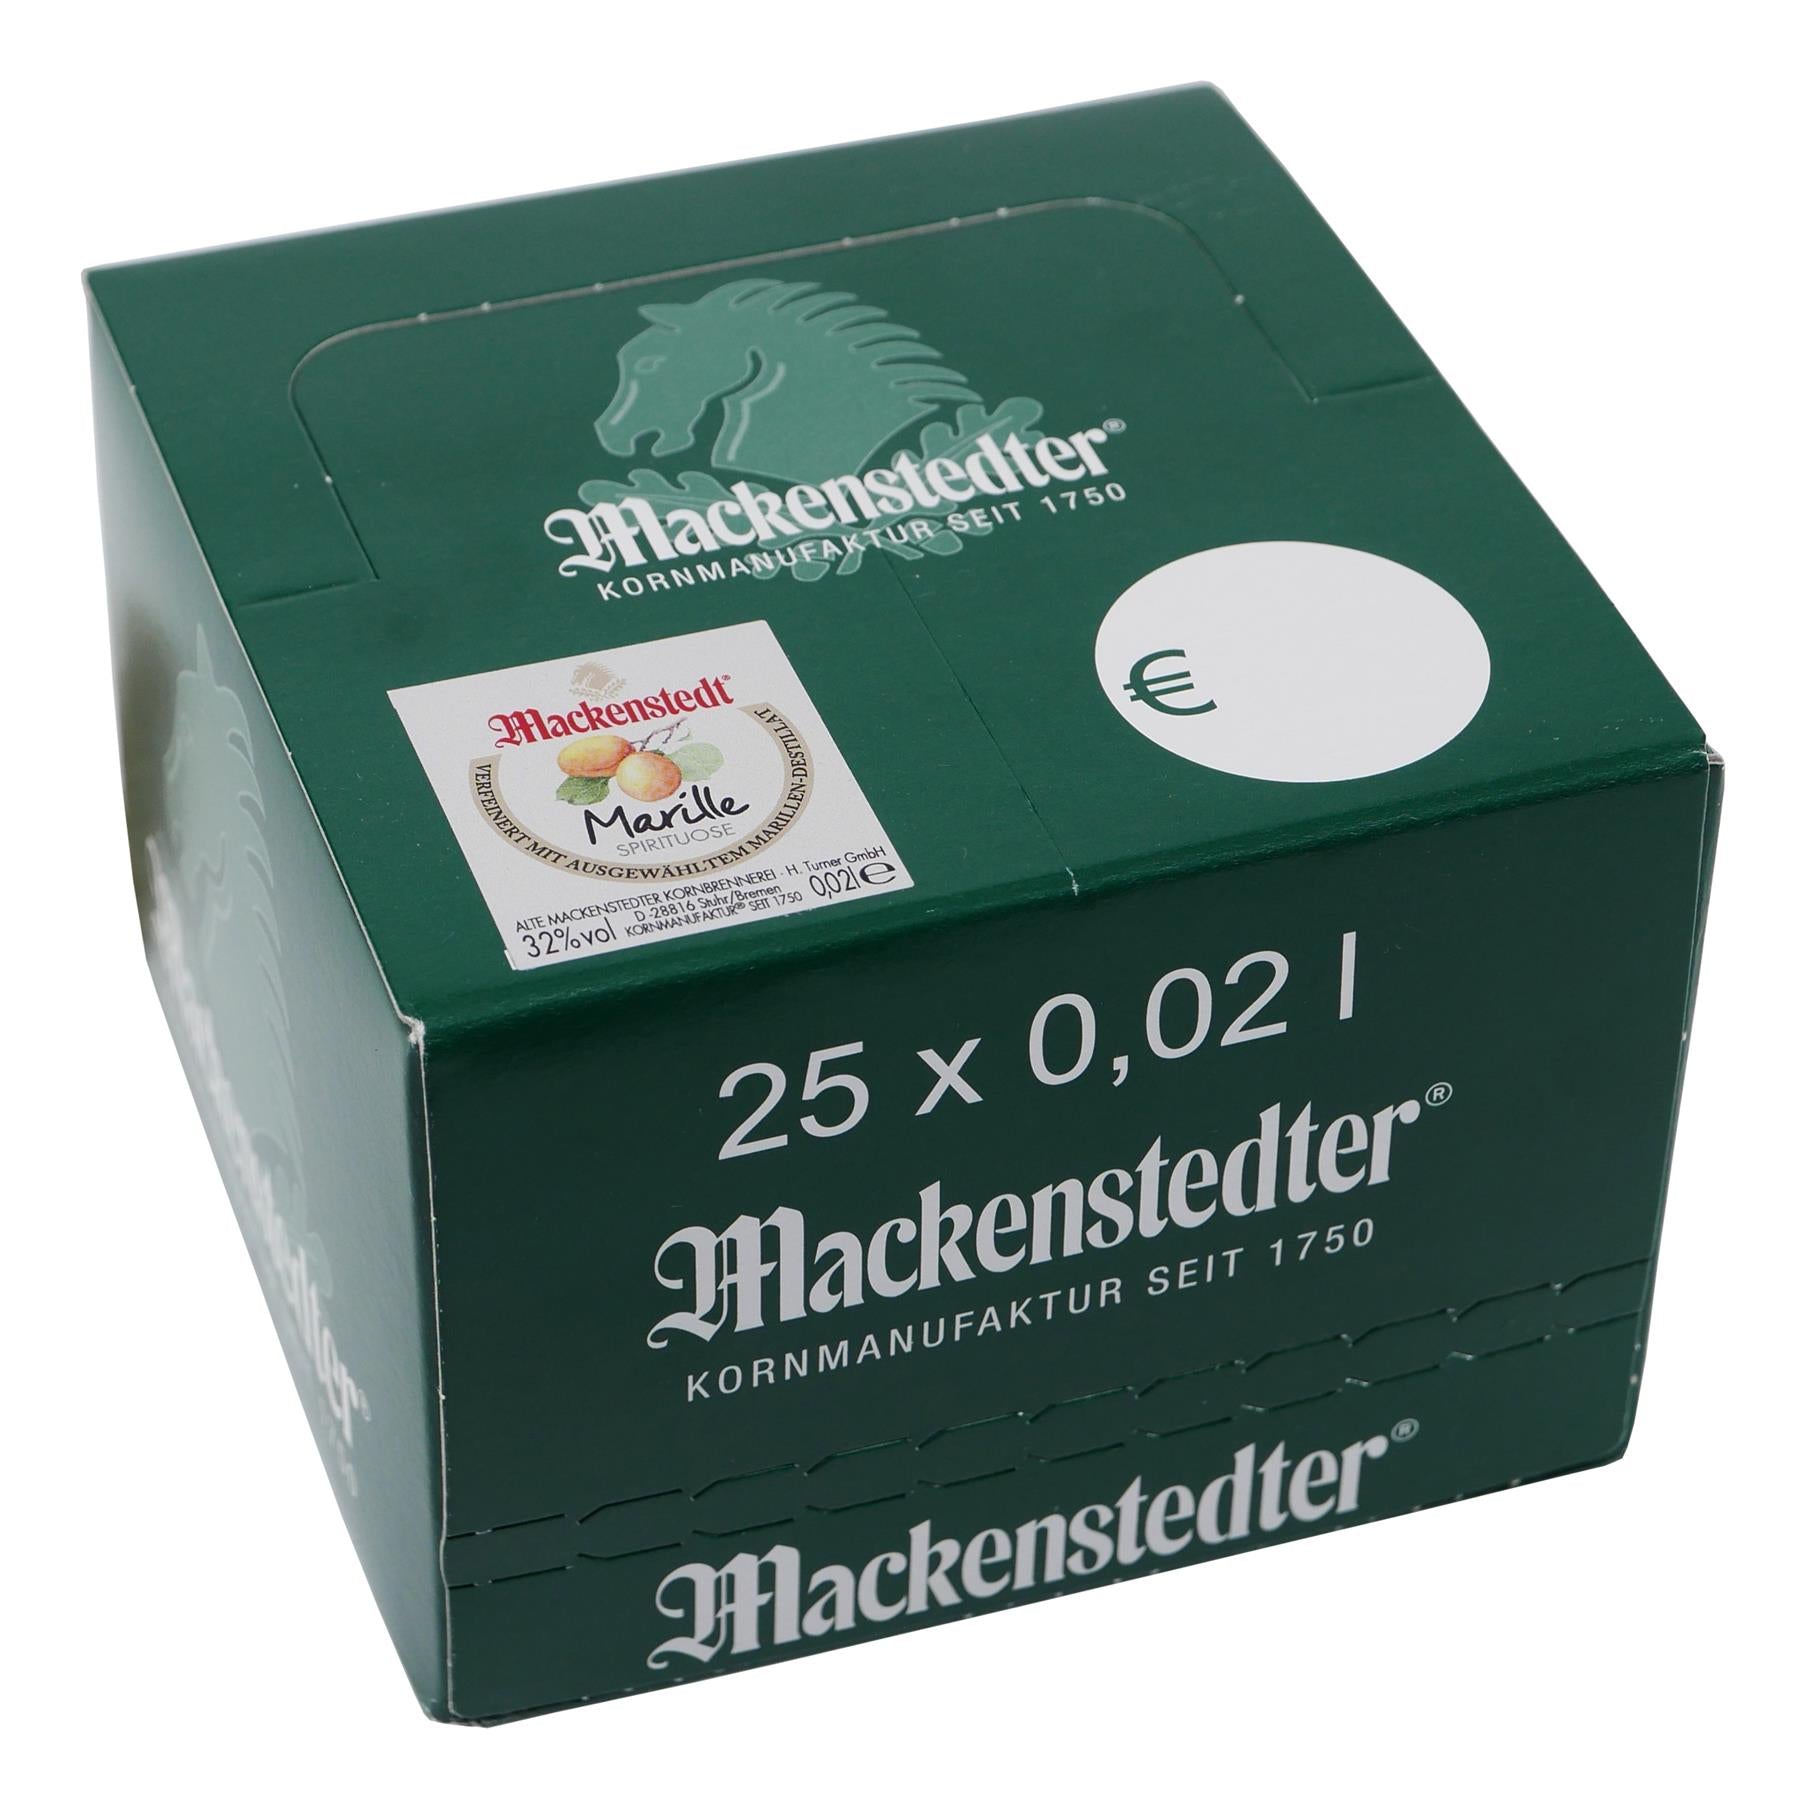 Mackenstedter Marille (25 x 0,02L)